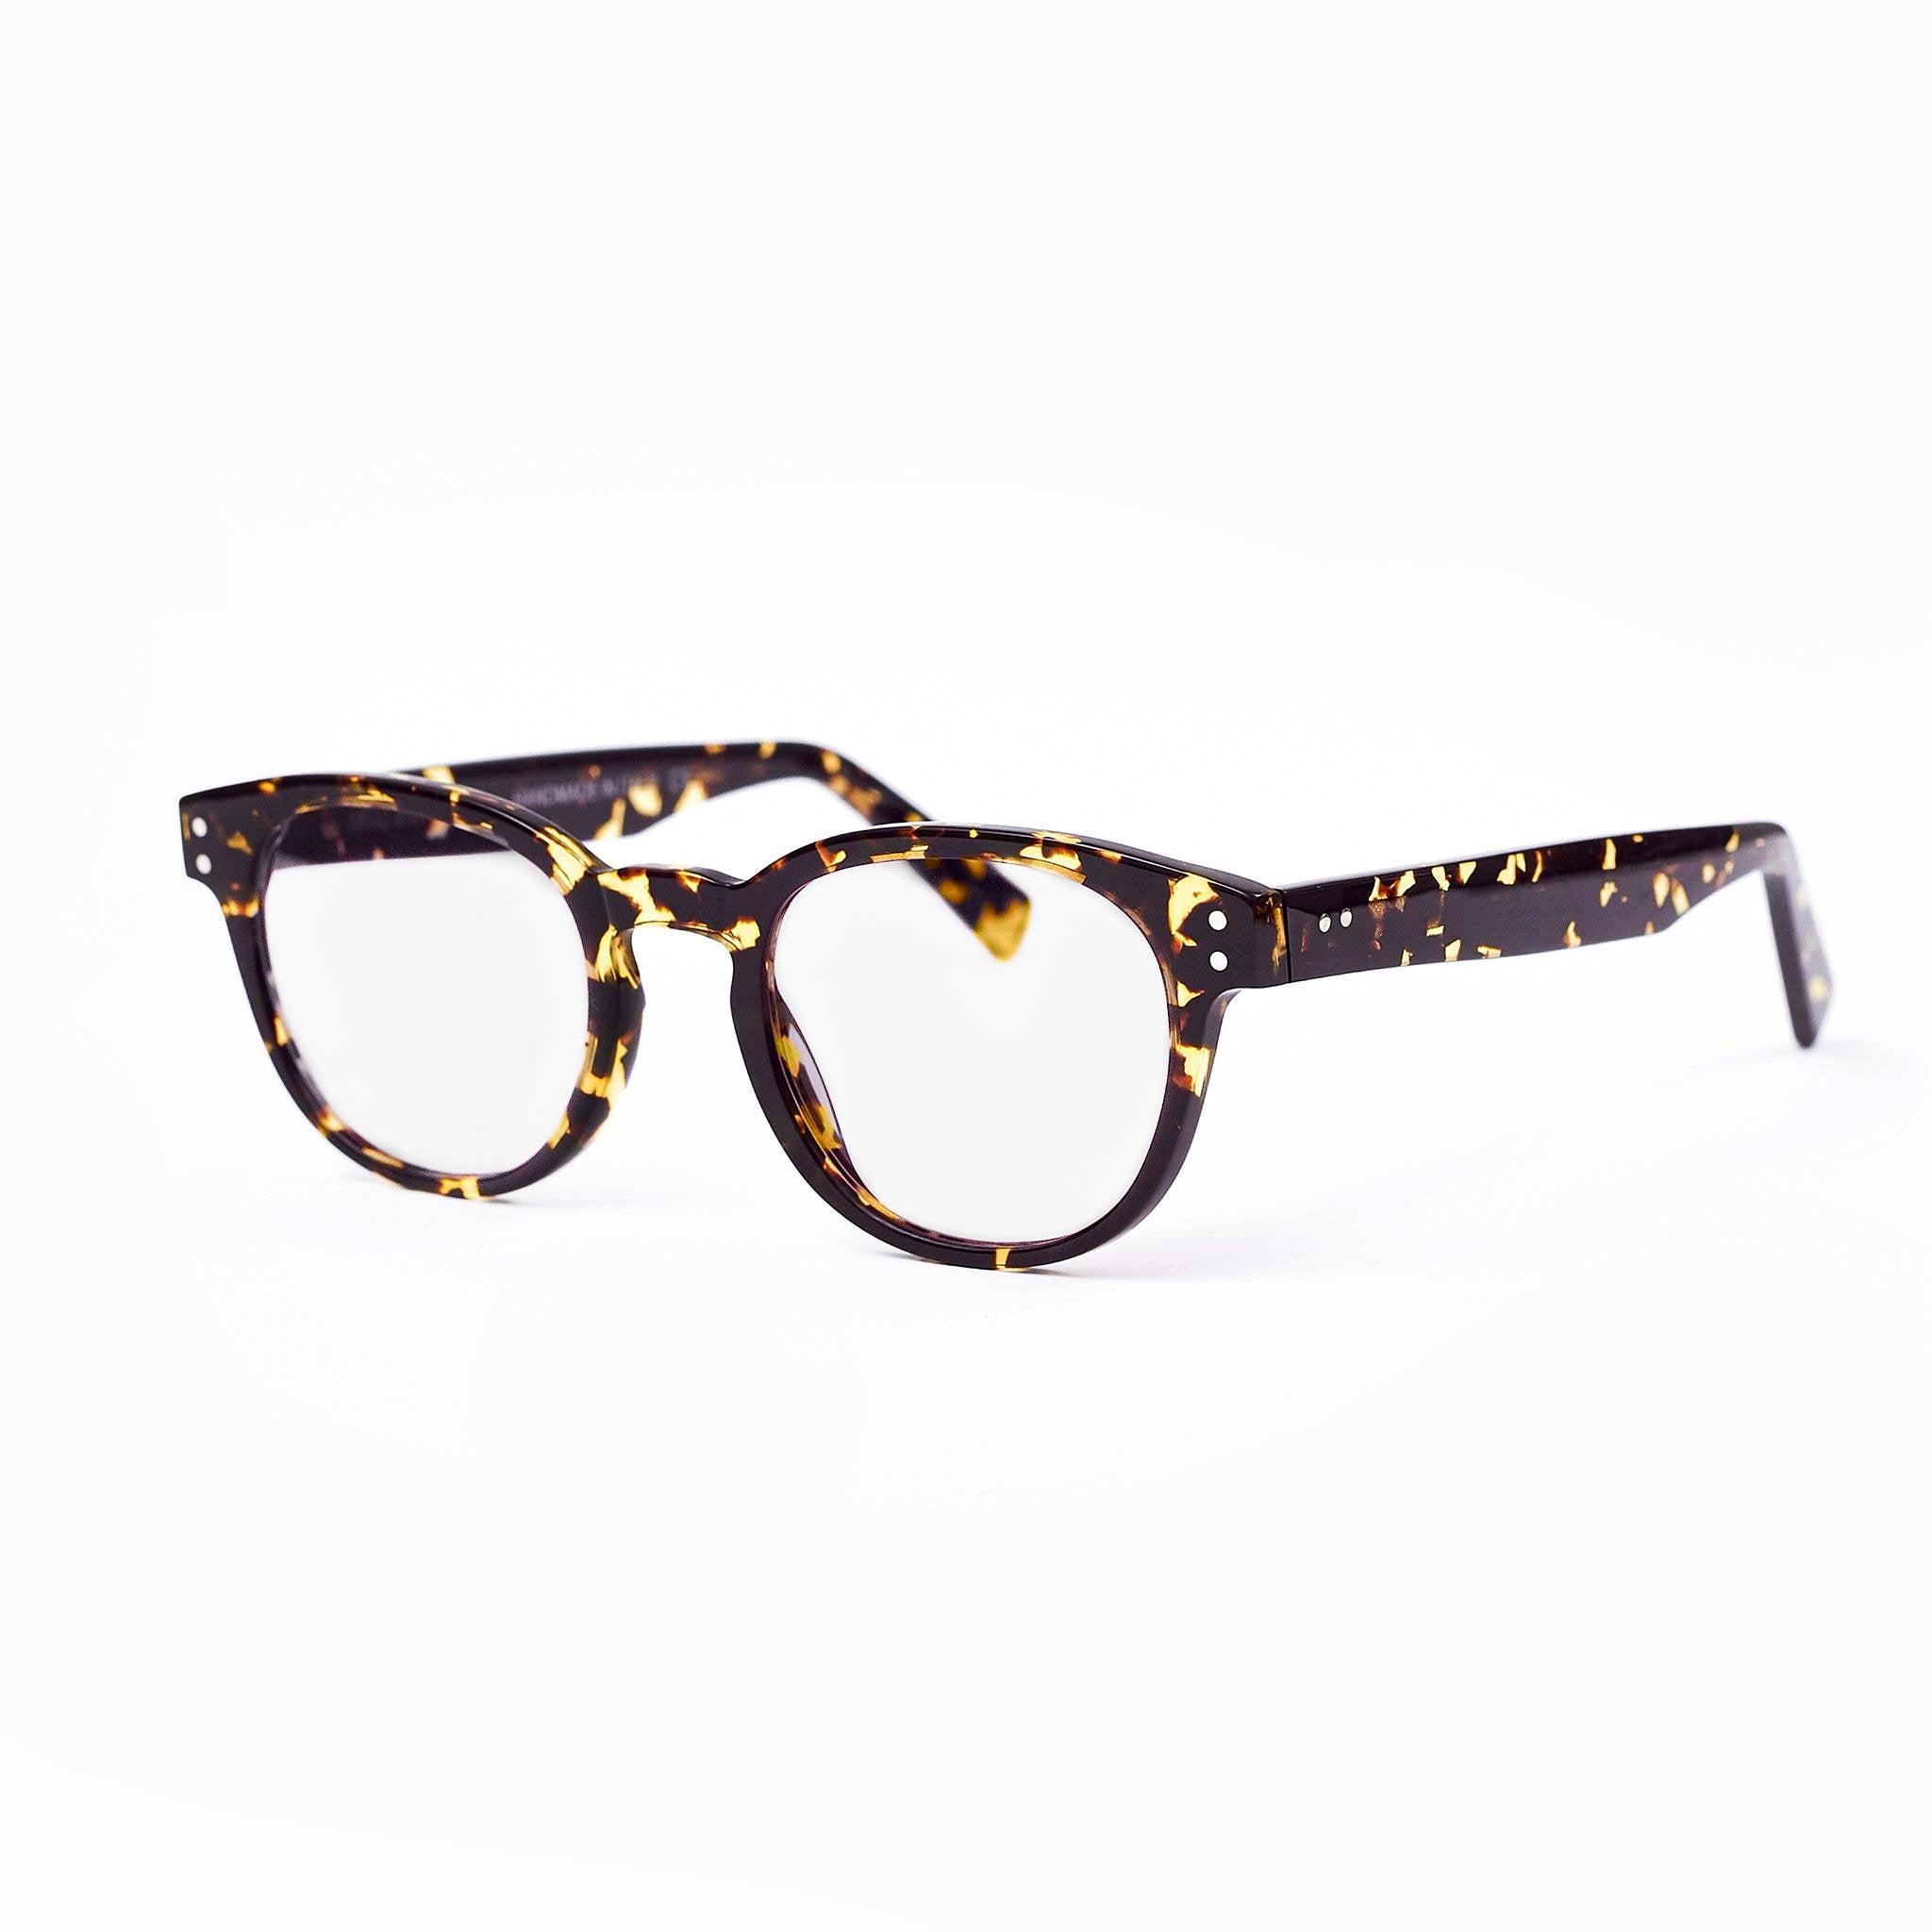 Ameos eyewear lucid optical glasses in havana frames, unisex and handmade in italy